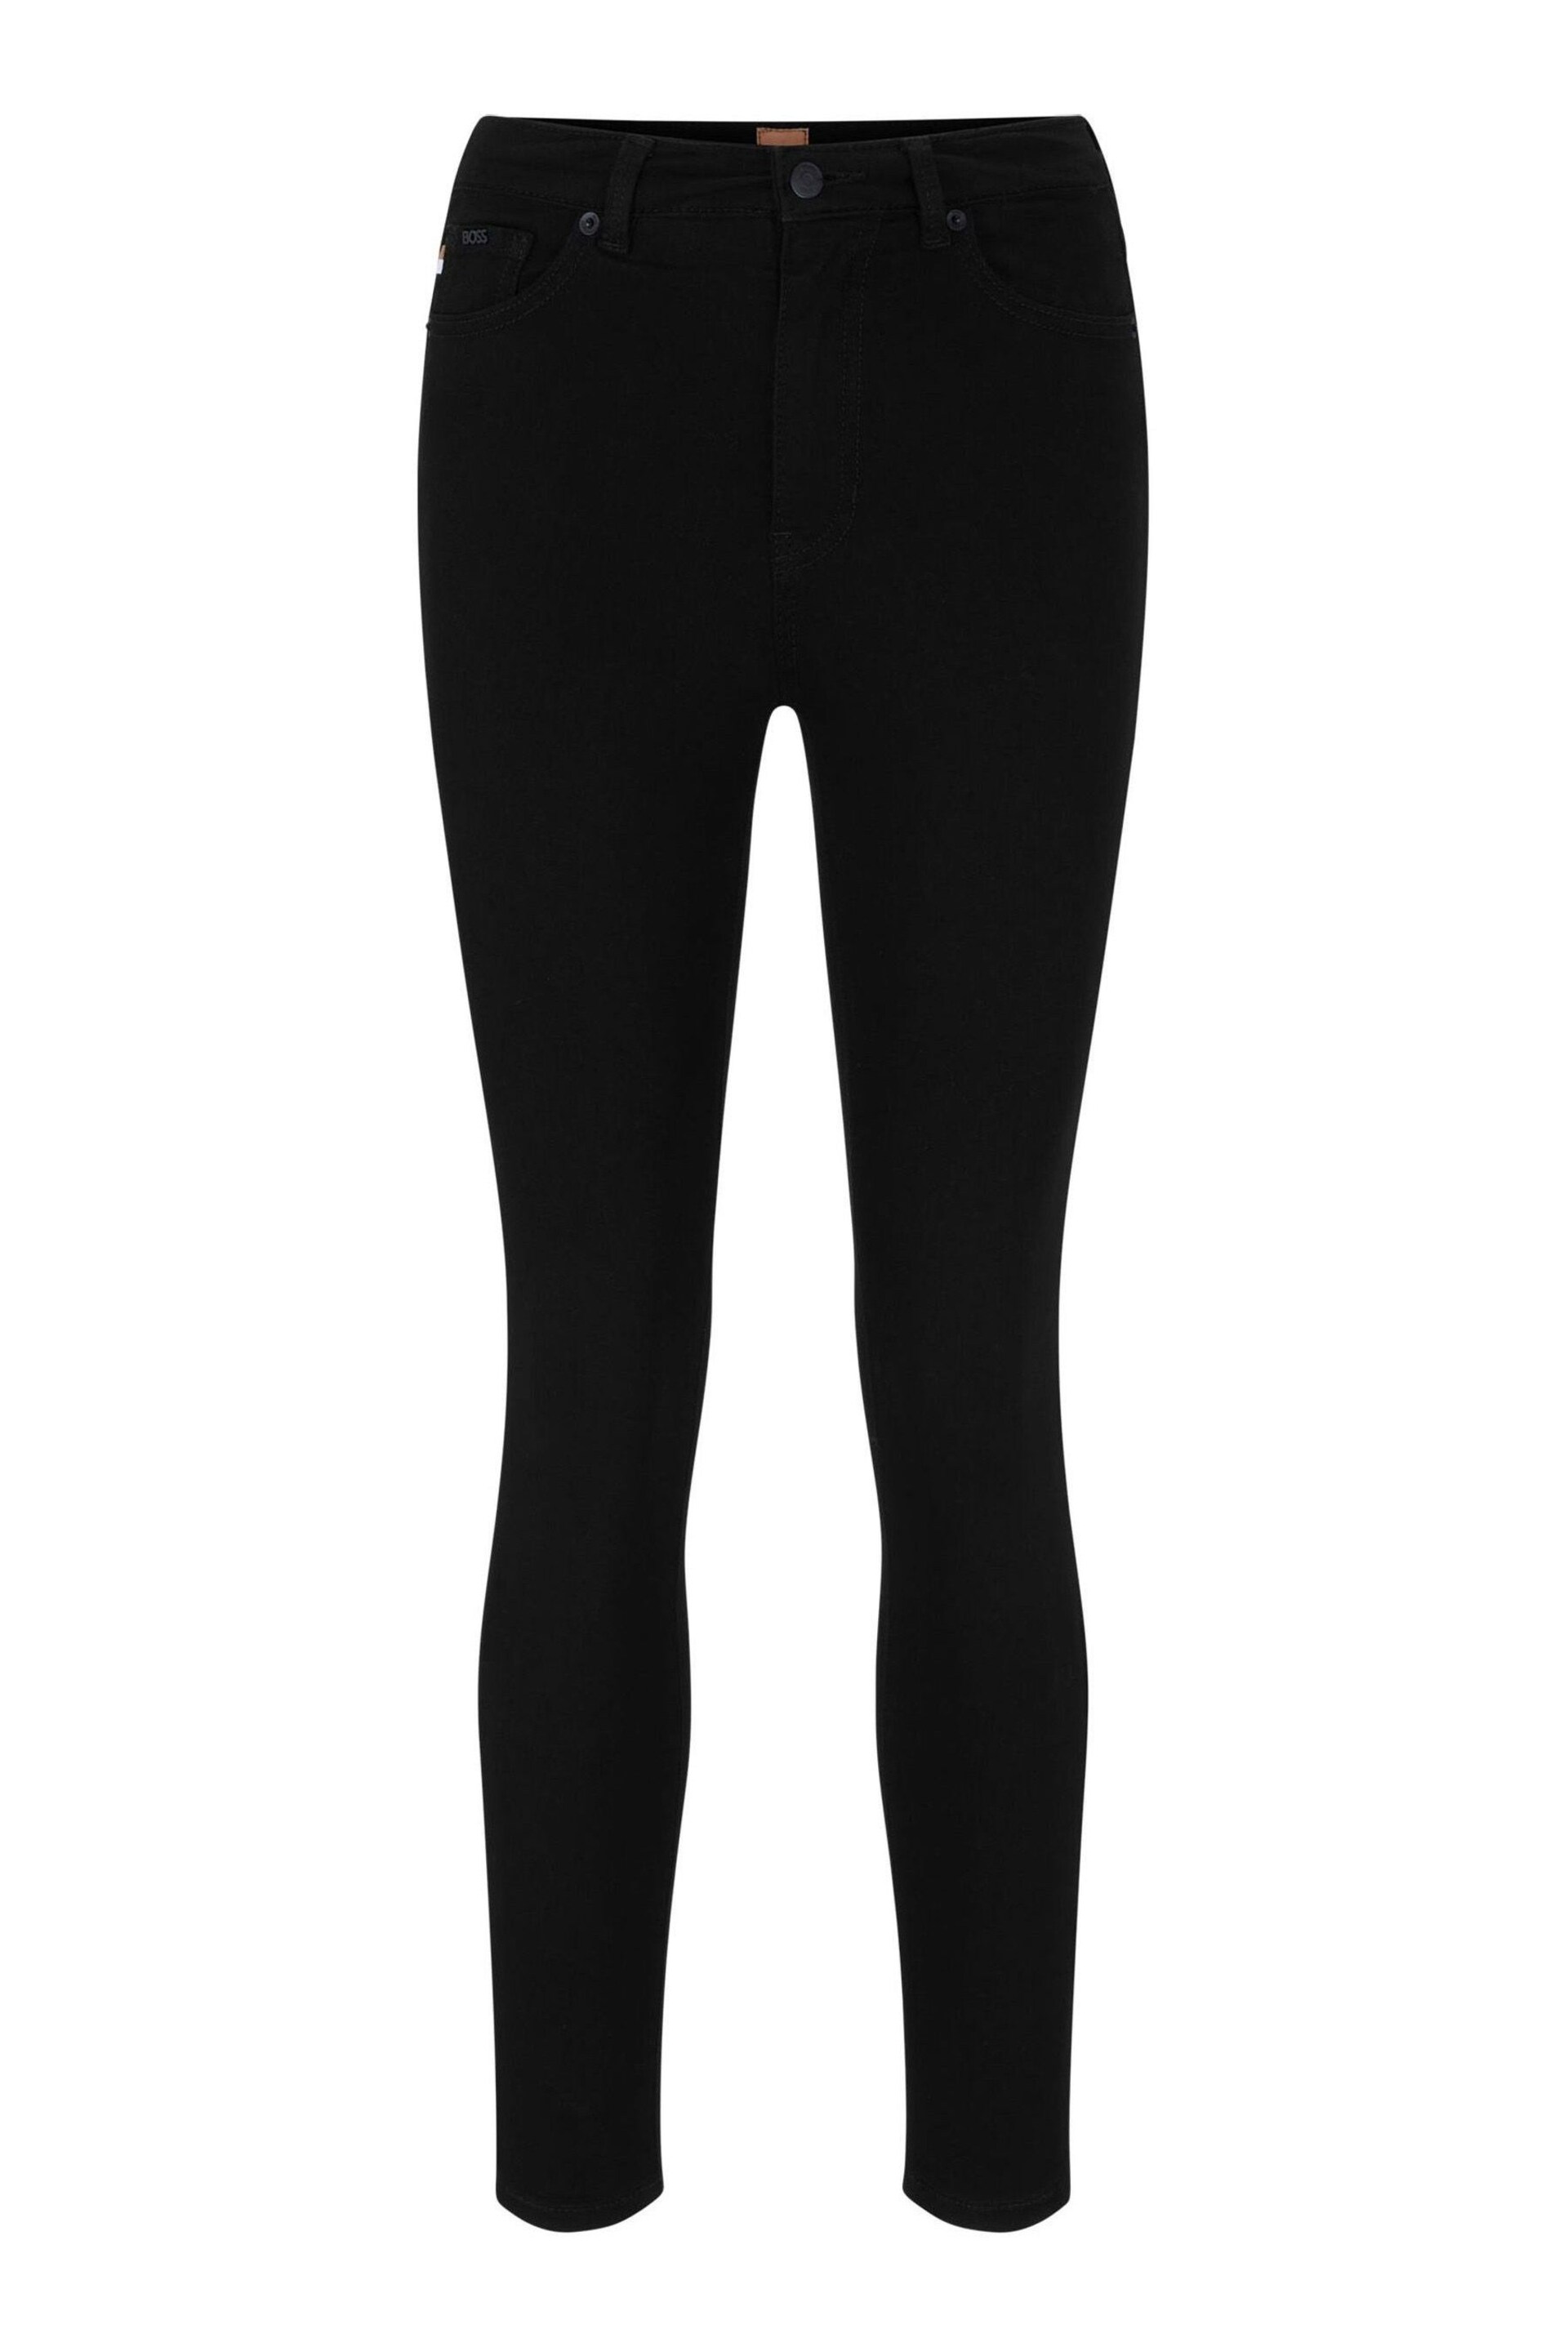 BOSS Black Maye Slim Stretch Jeans - Image 5 of 6